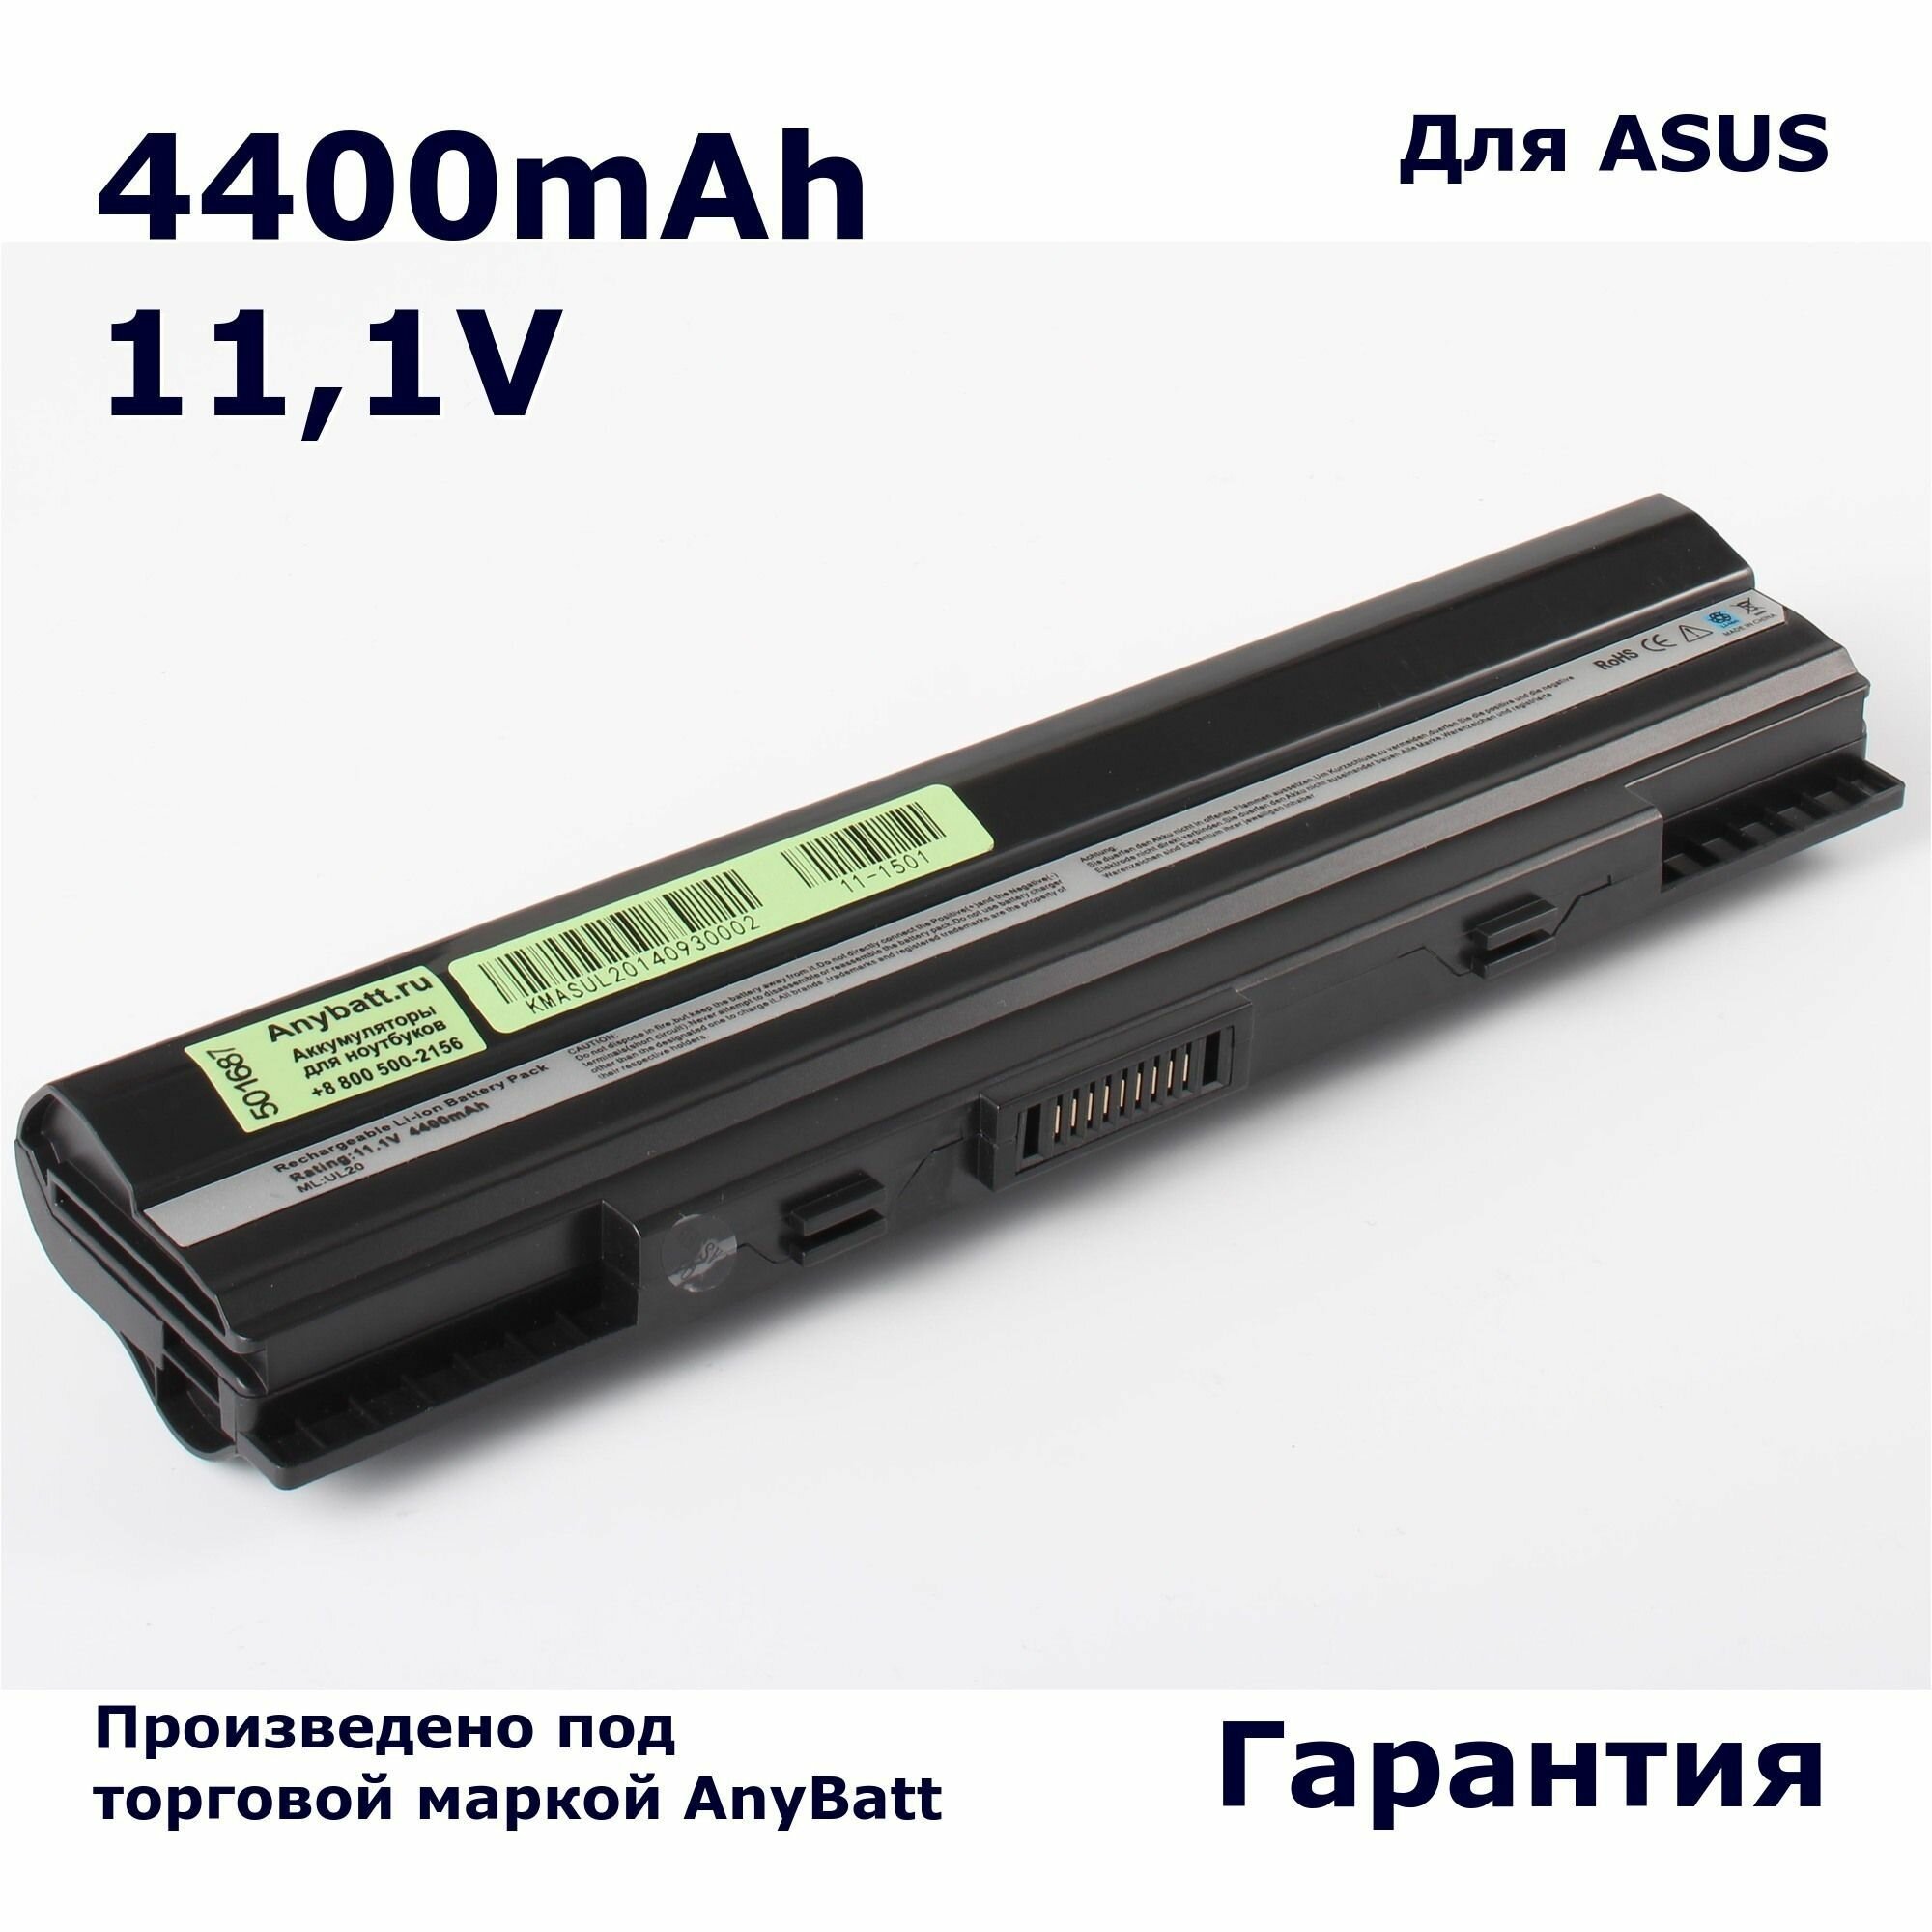 Аккумулятор AnyBatt 4400mAh для ноутбука Asus